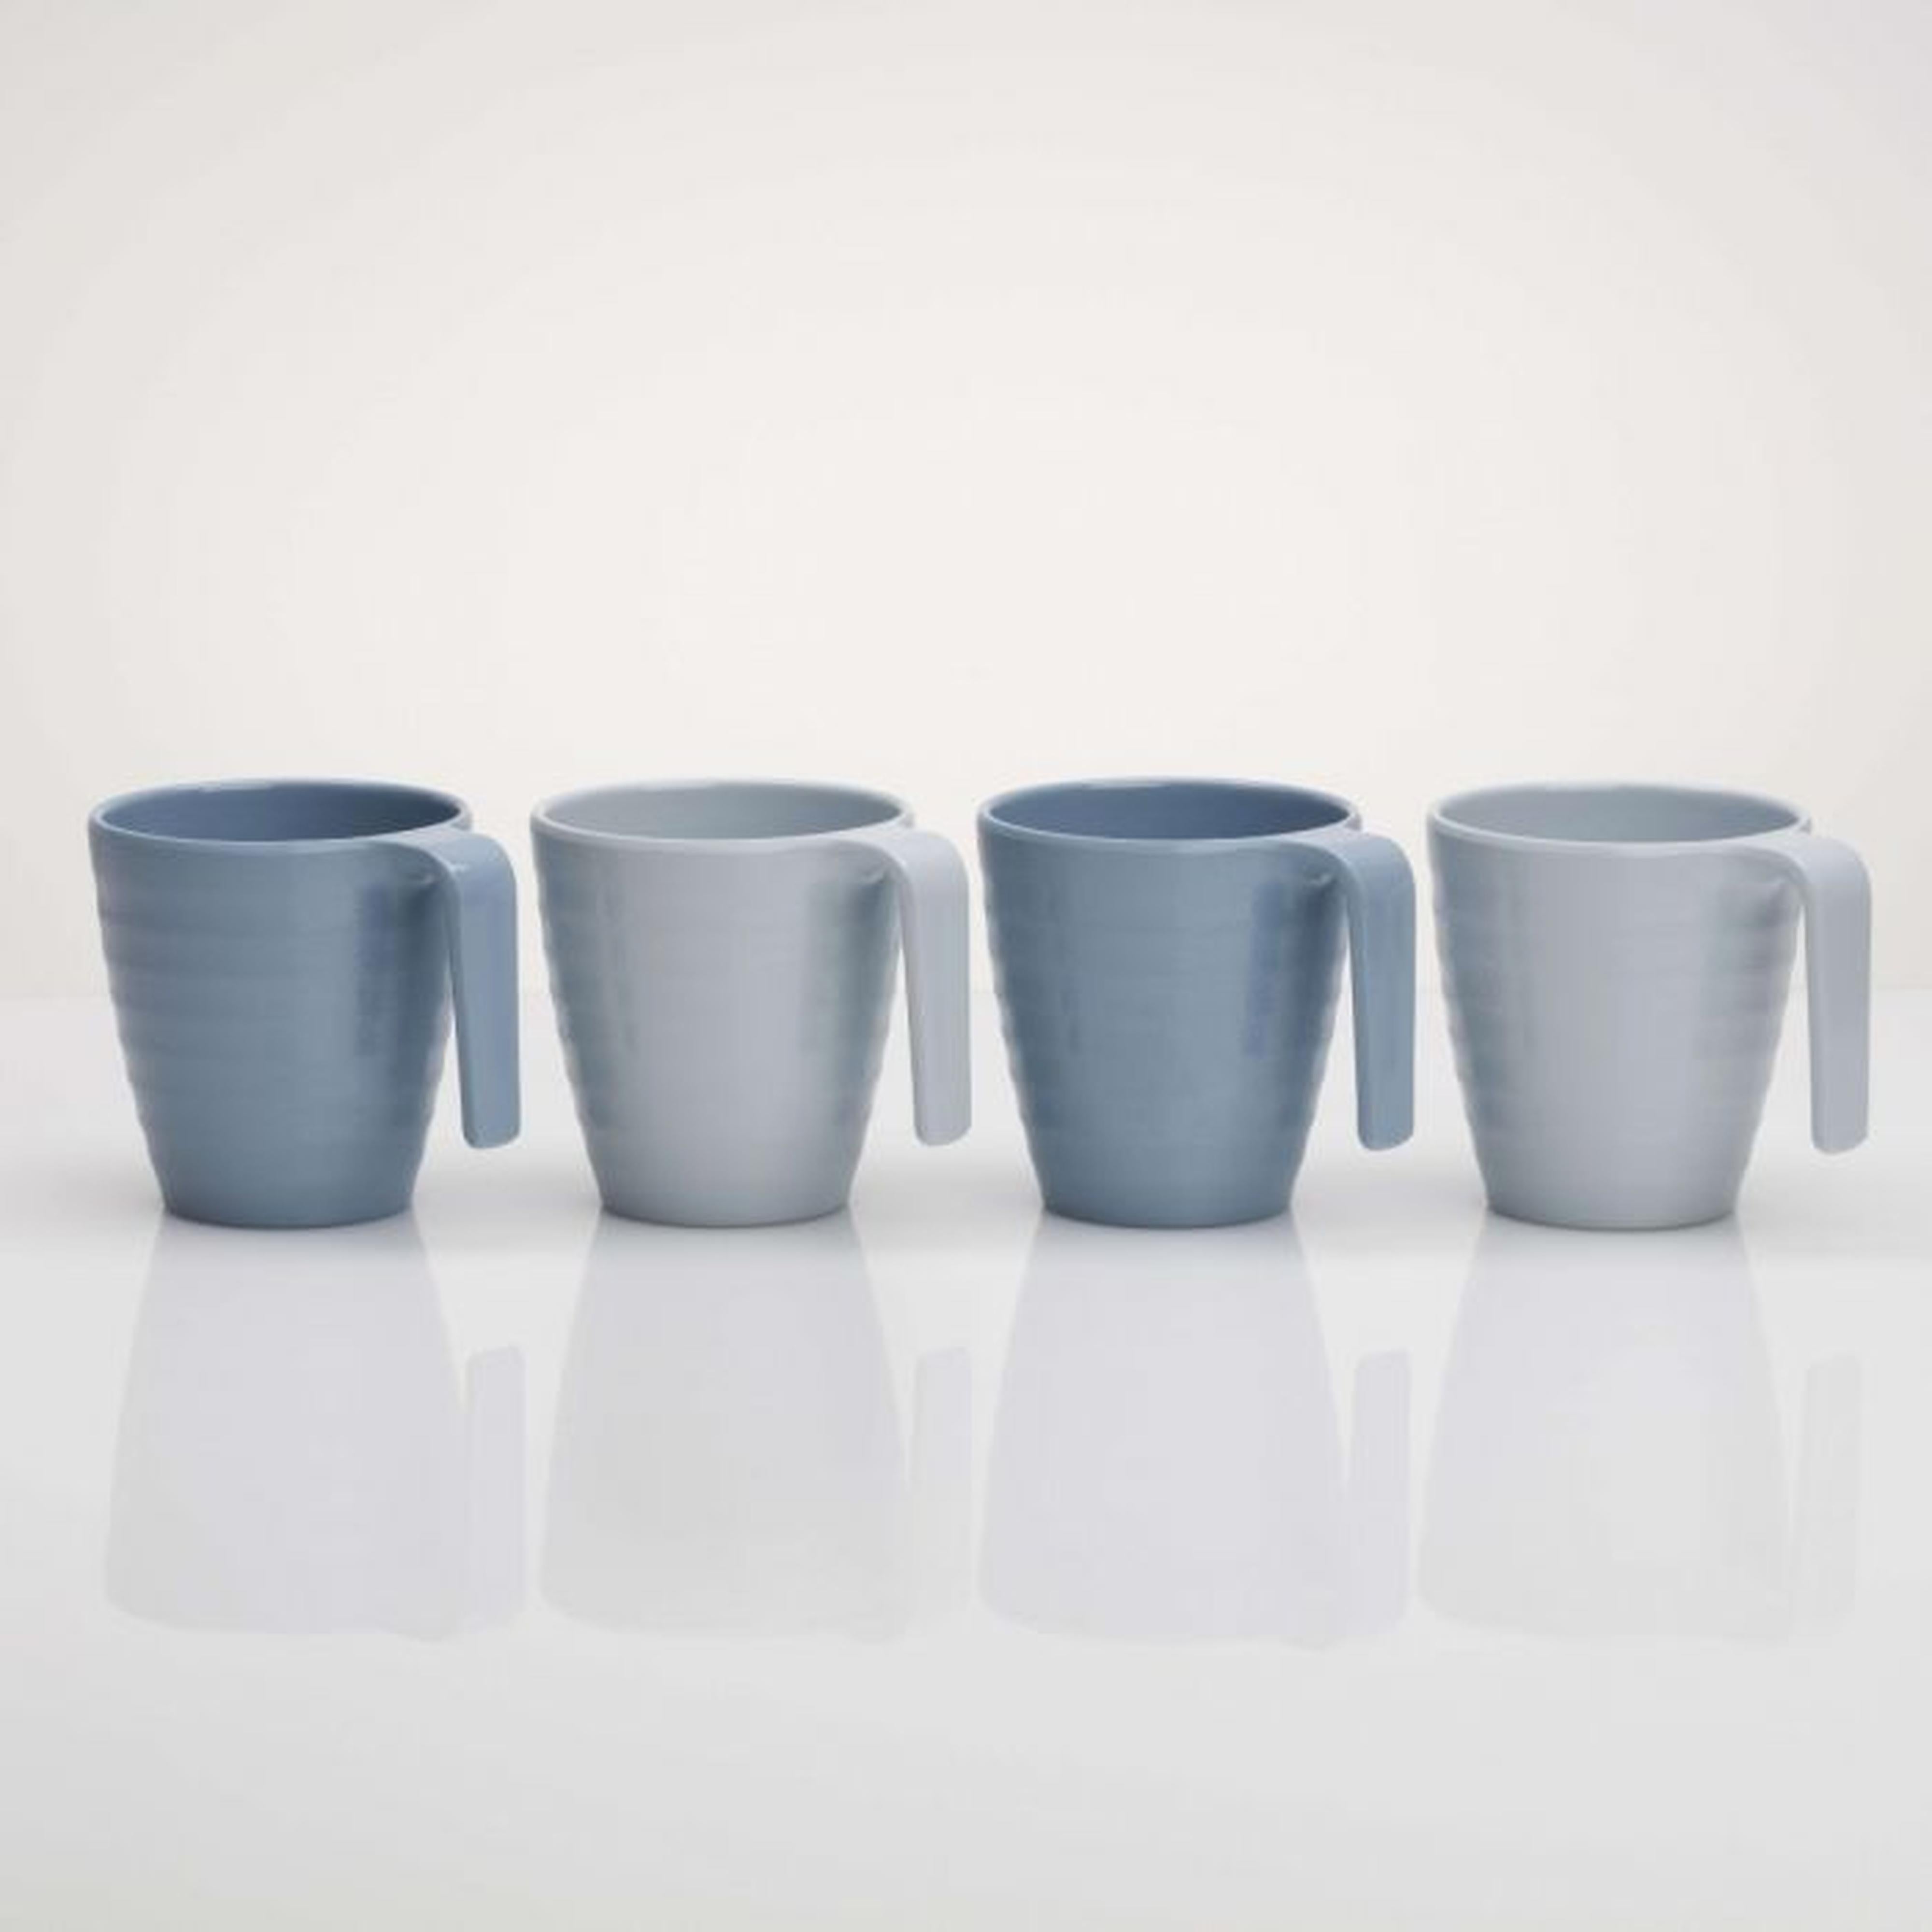 flamefield shades of blue mug set of 4